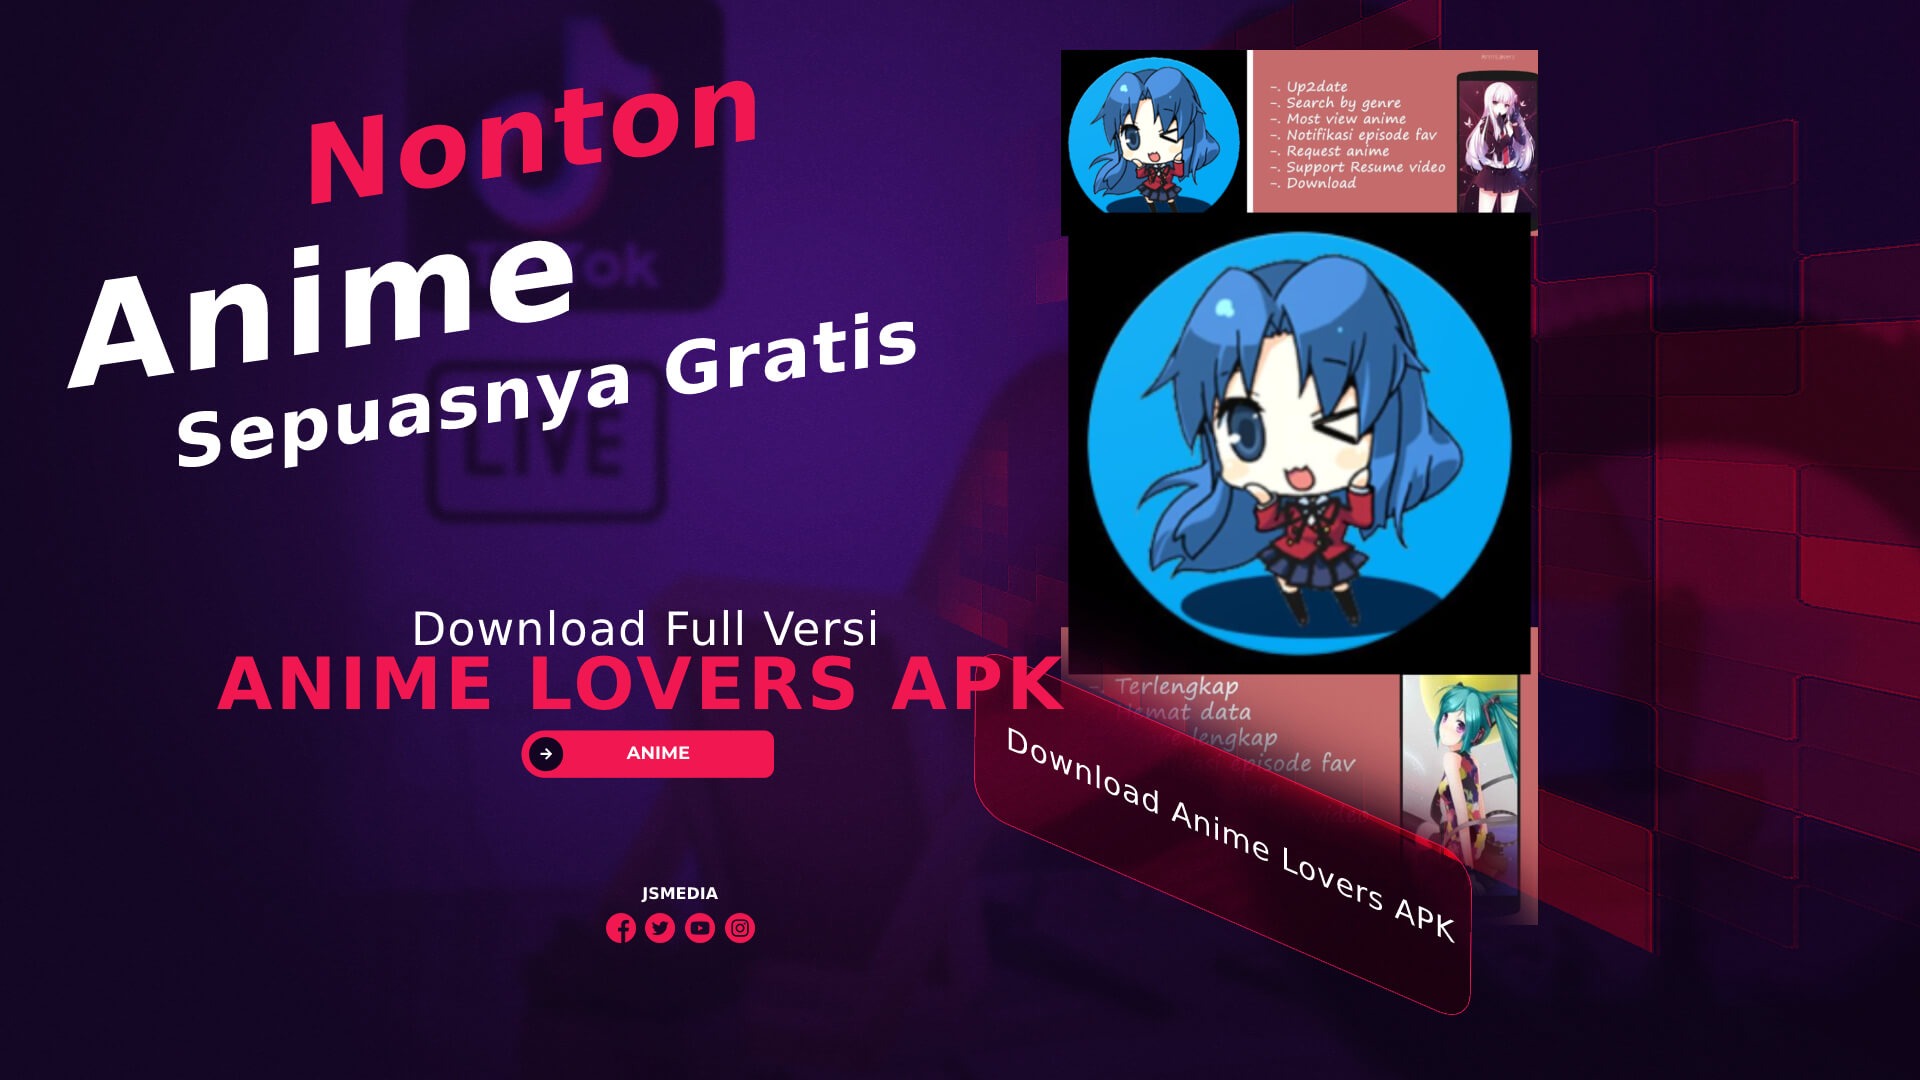 Download Anime Lovers APK Terbaru Gratis, Nonton Anime Sepuasnya